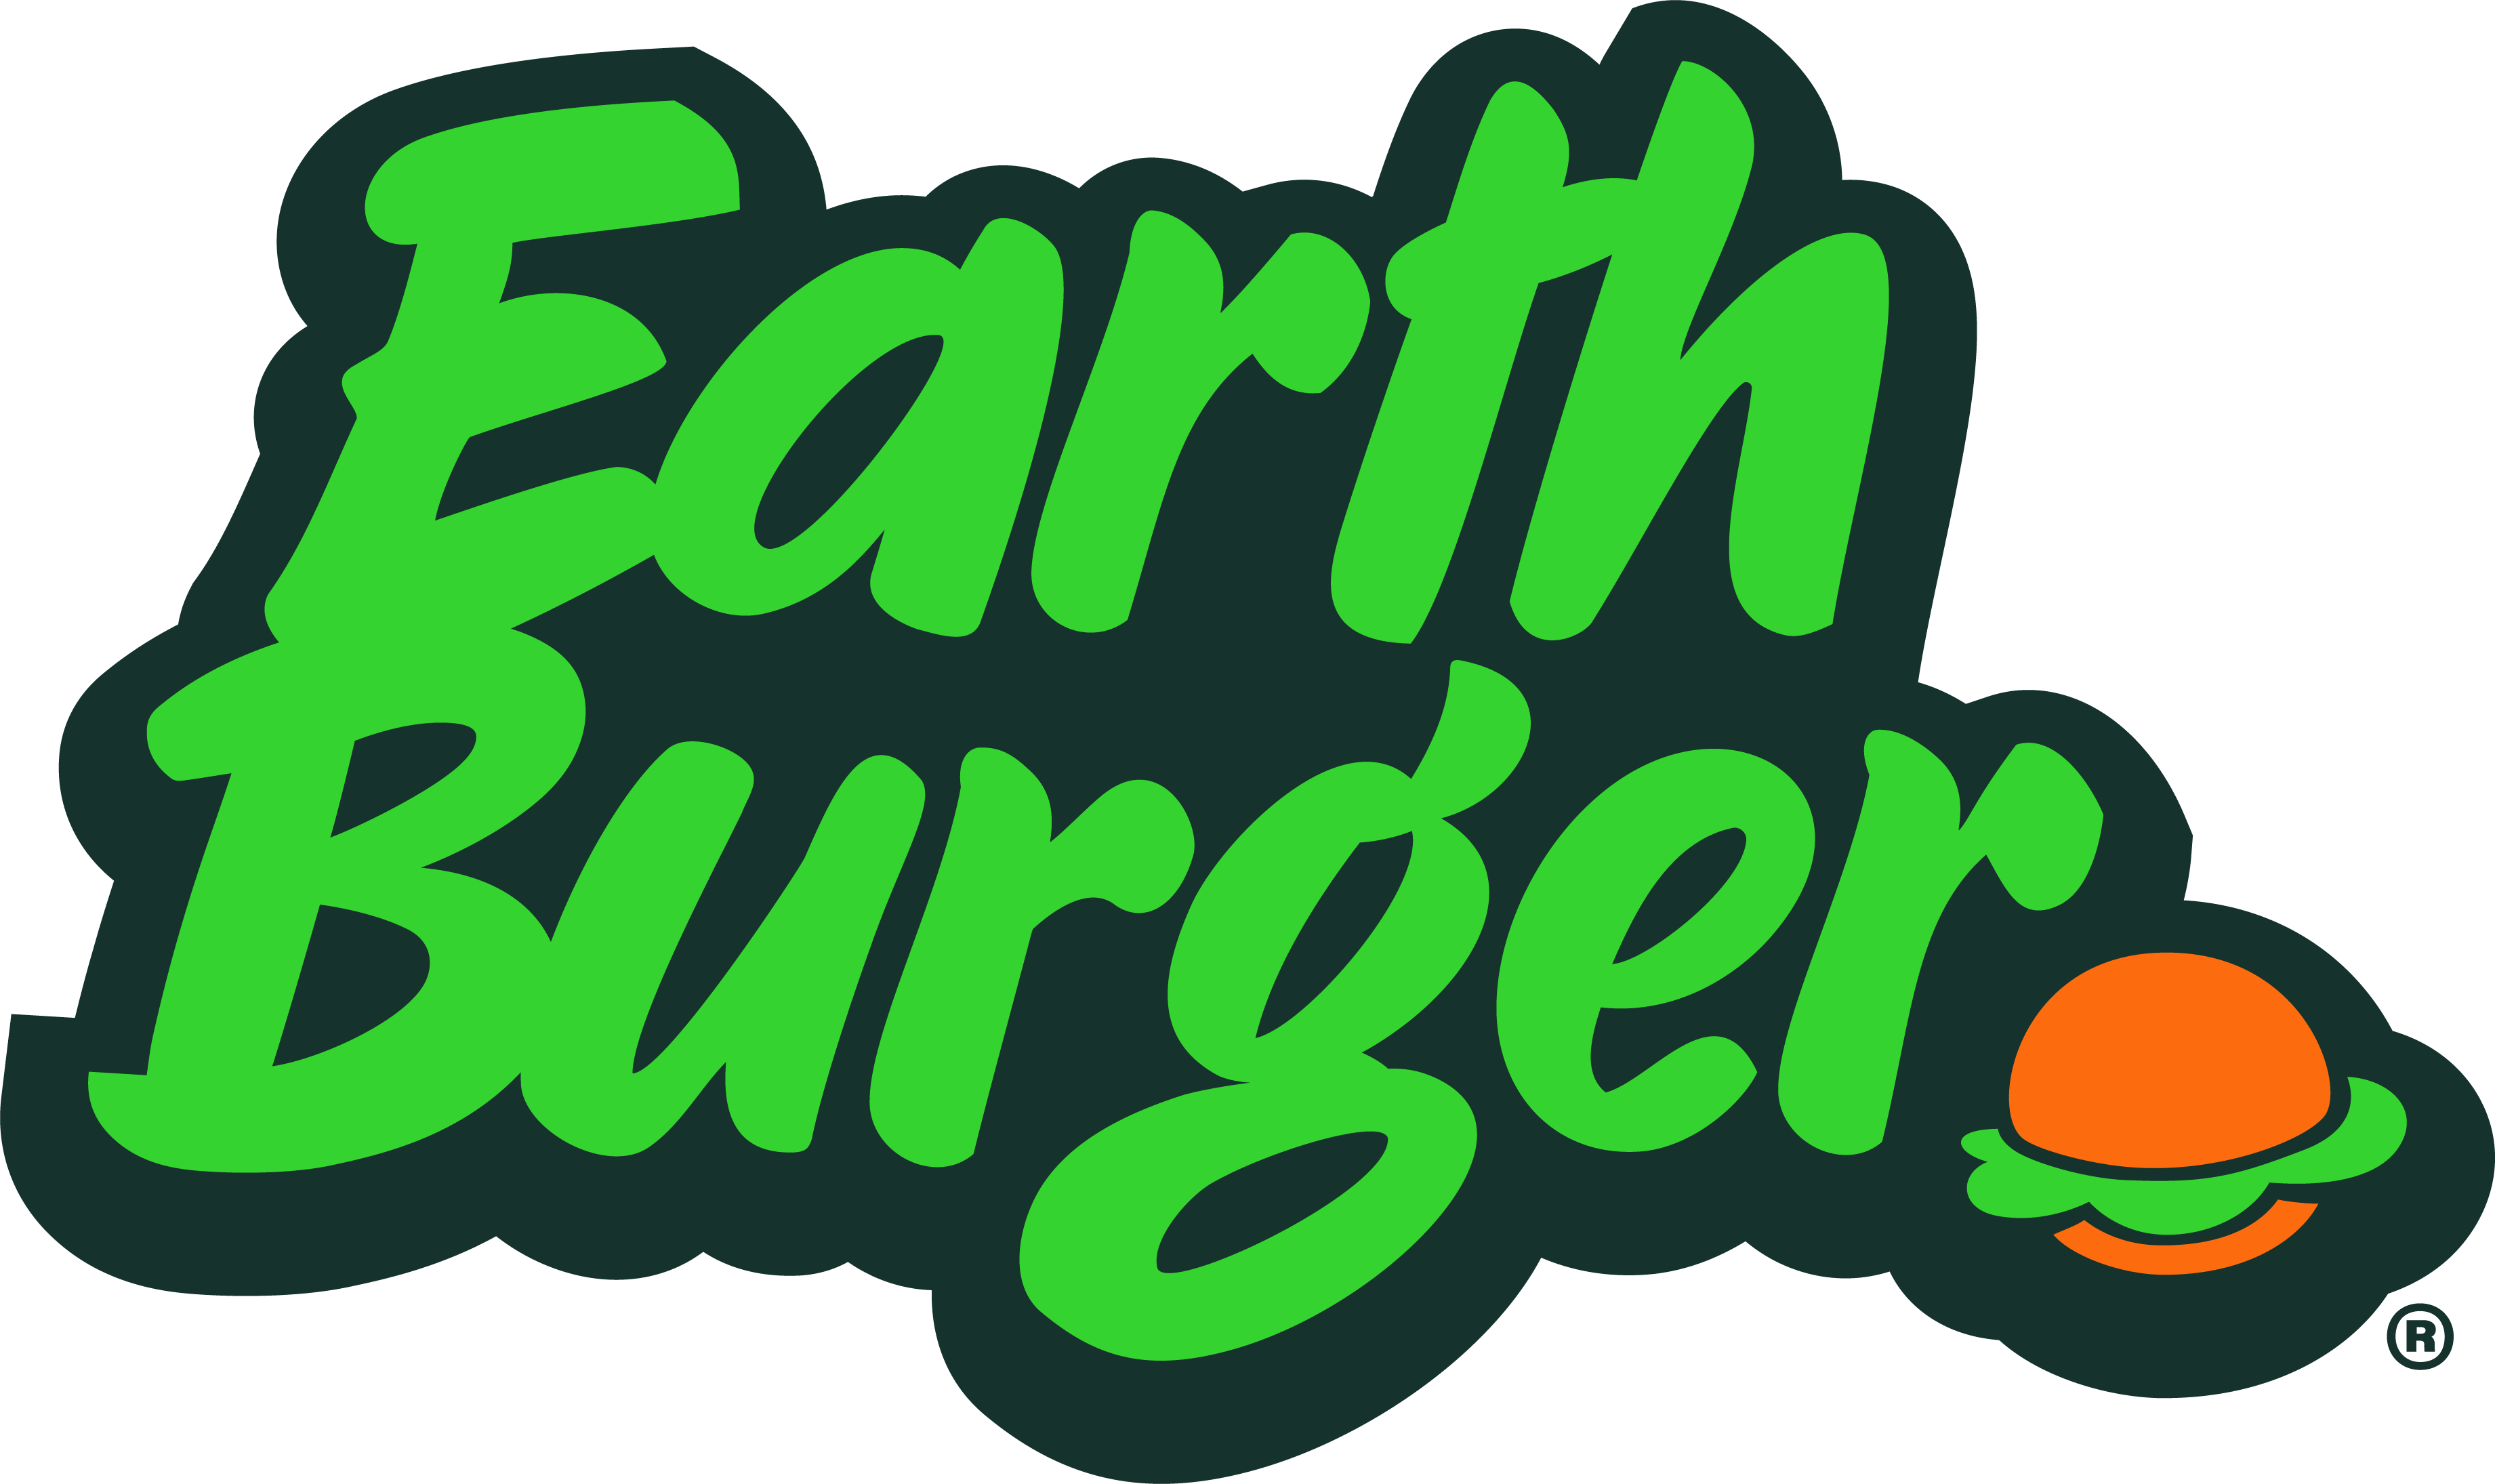 Earth Burger Home